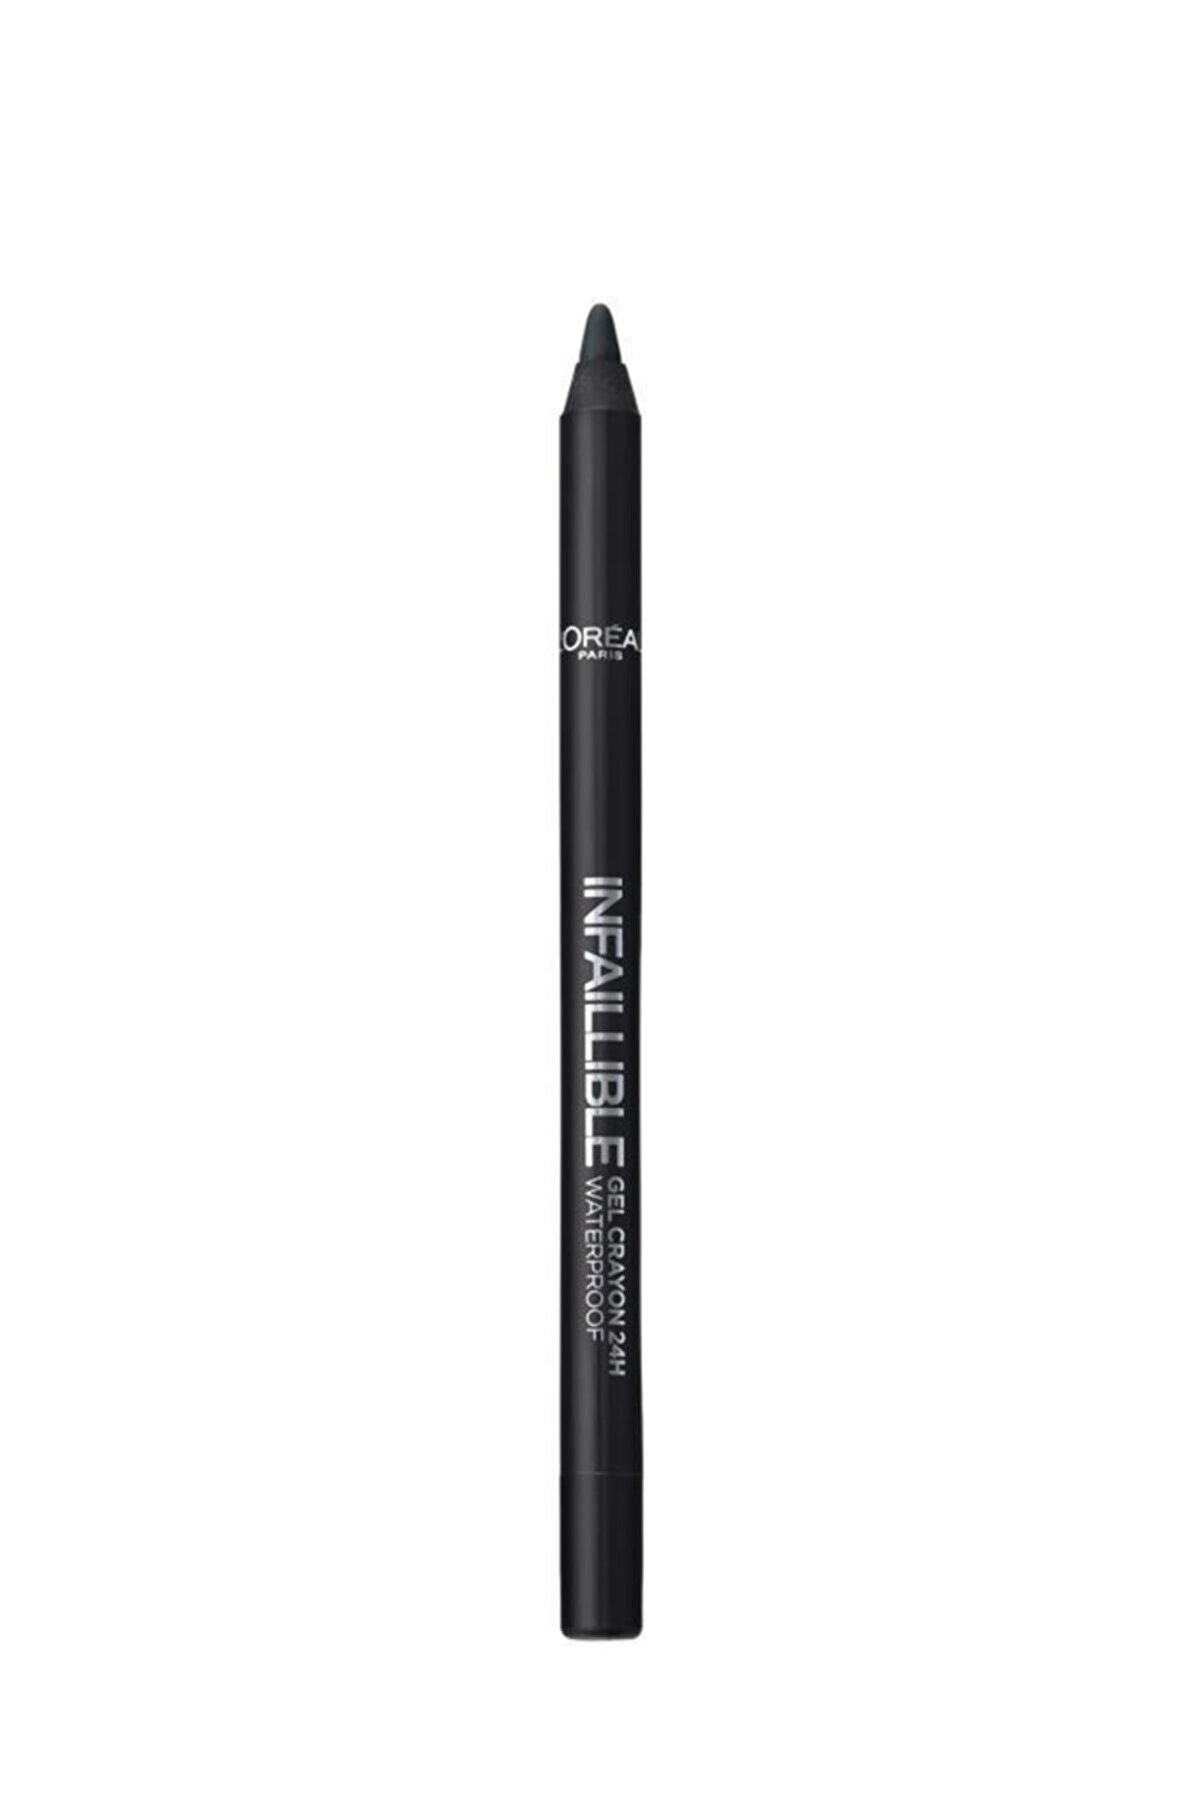 L'Oreal Paris Siyah Eyeliner - Infaillible Gel Crayon Eyeliner 01 Black 3600523351497